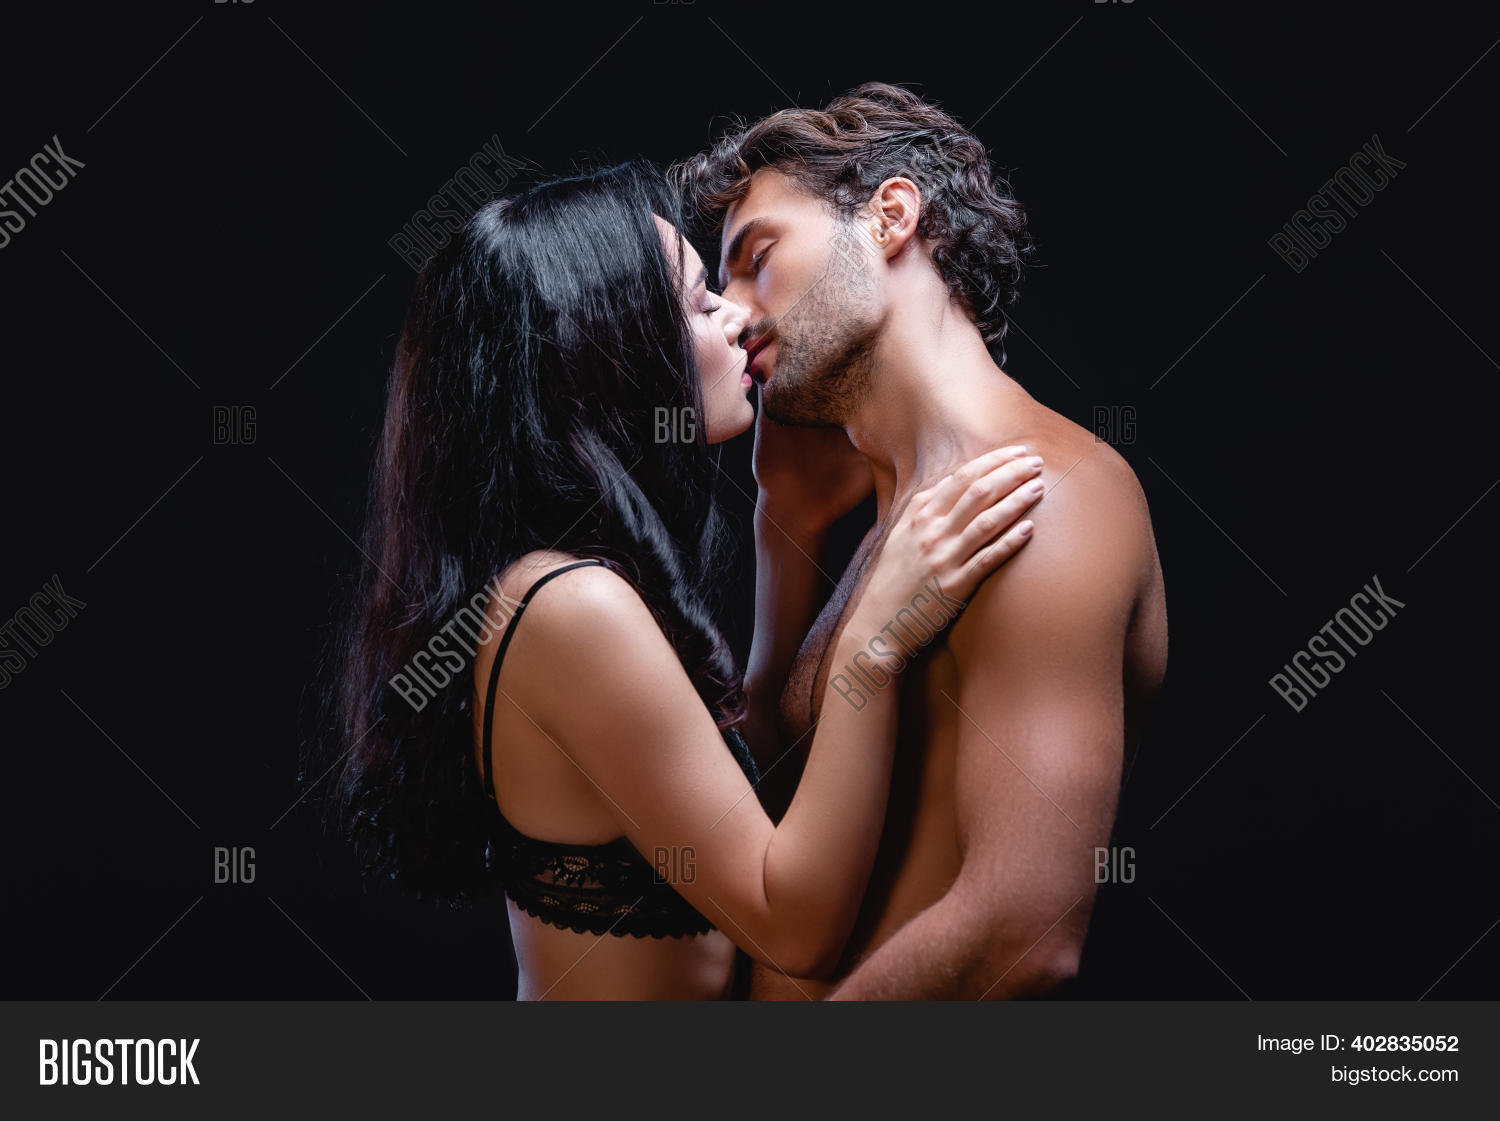 dave dantonio share hot women kissing men photos